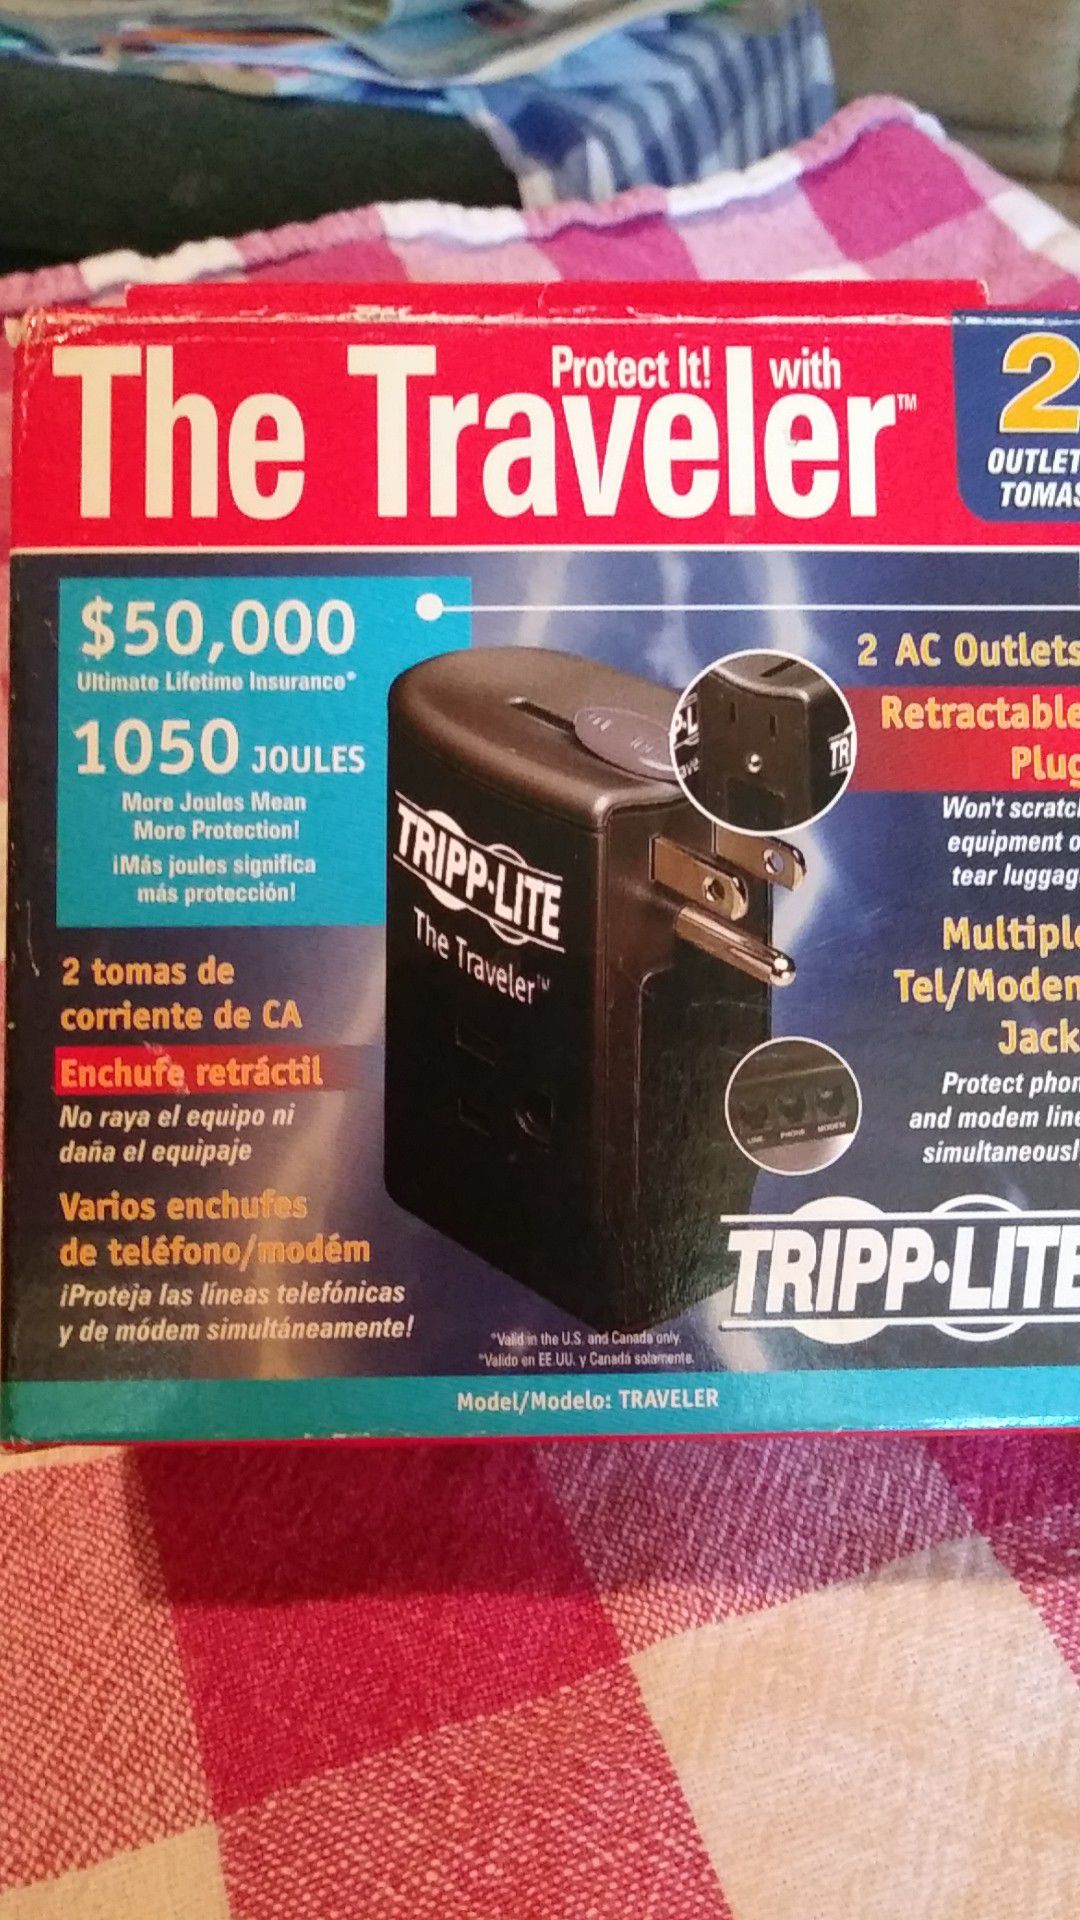 Tripp-Lite 'The Traveler'